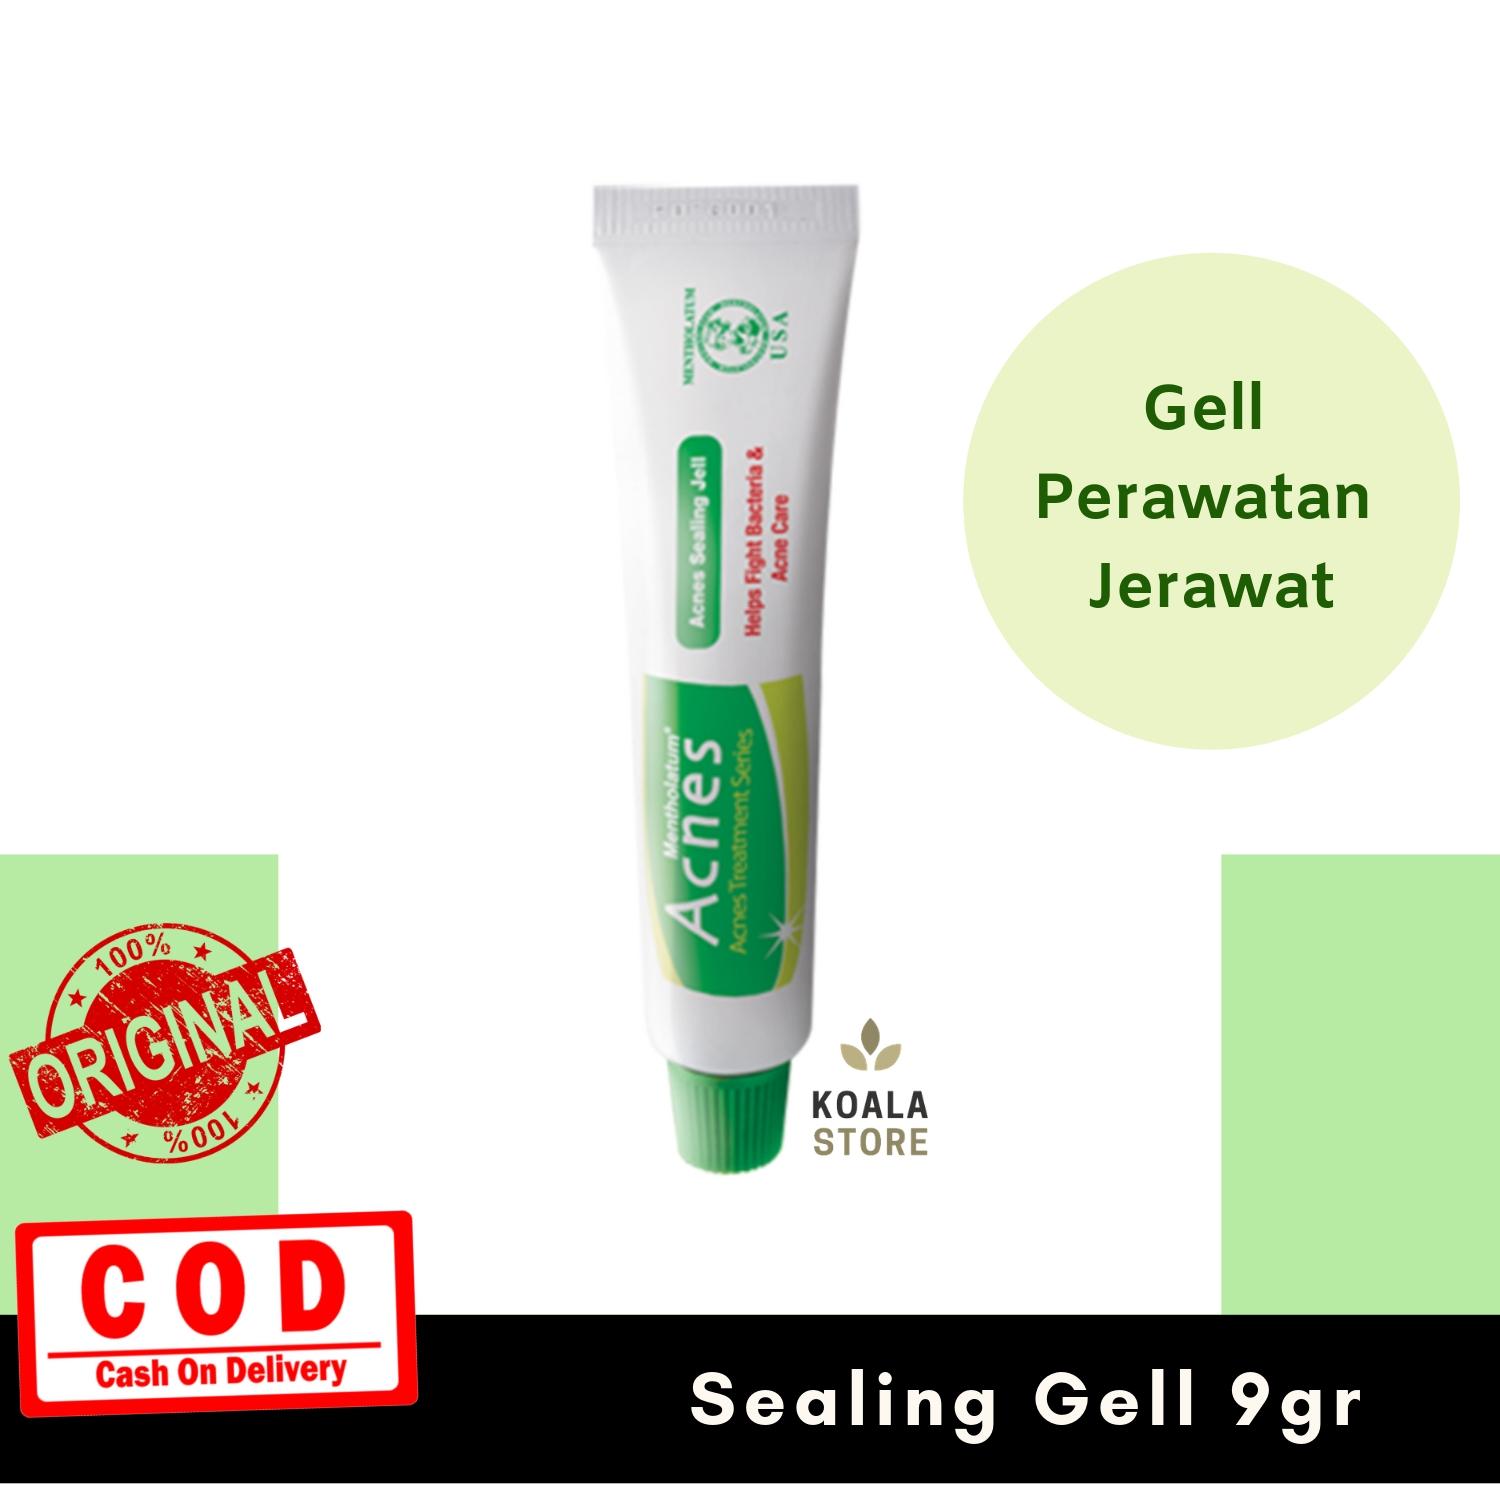 Acnes Sealing Jell 9gr Krim Jerawat Gell Penyembuh Wajah Berjerawat Lazada Indonesia